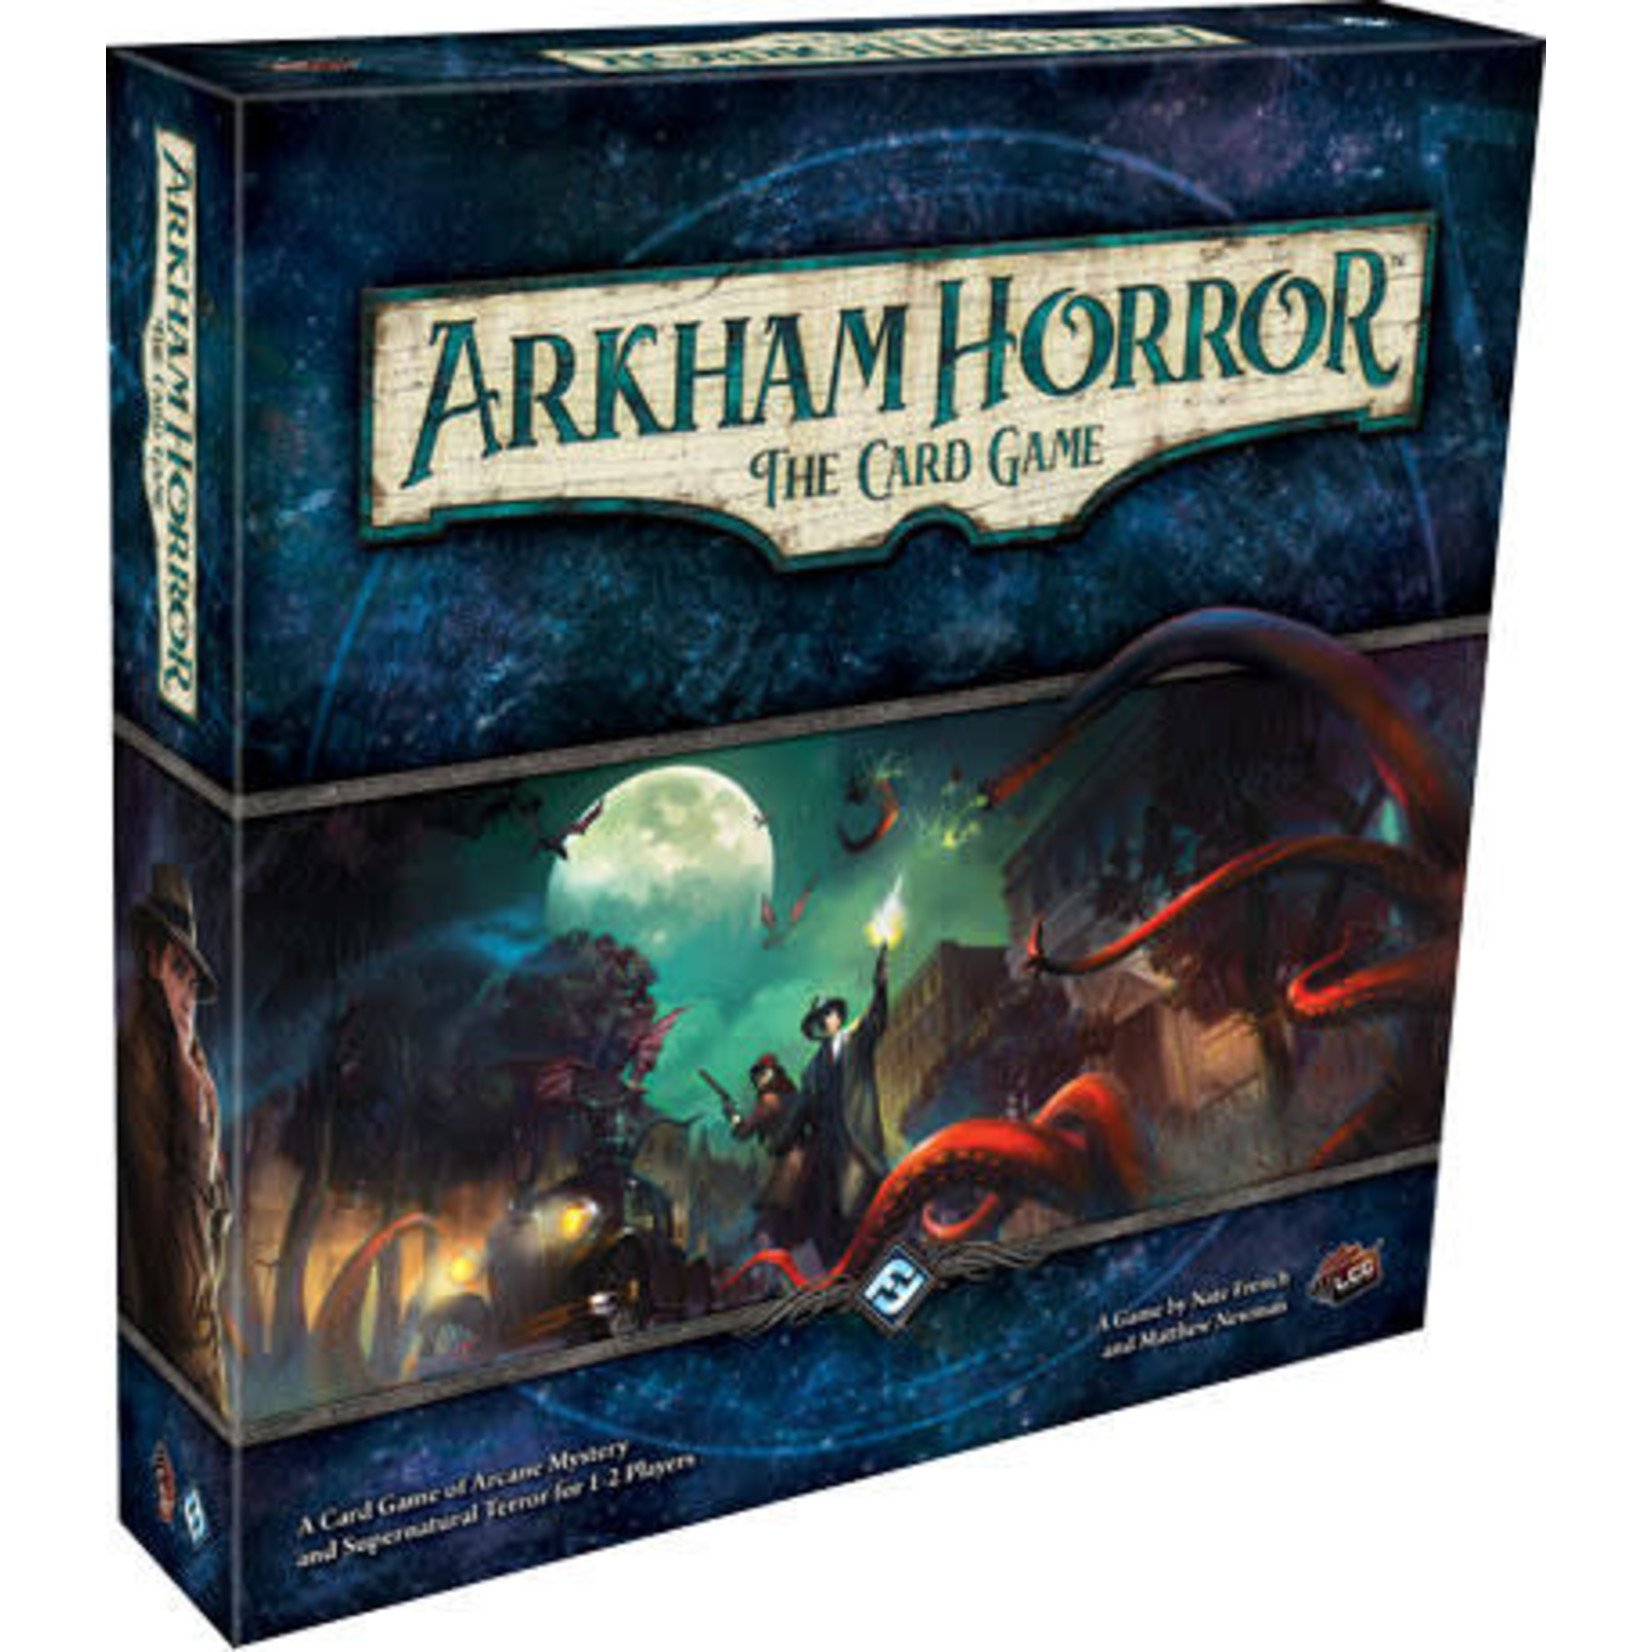 Fantasy Flight Games Arkham Horror LCG: Core Set